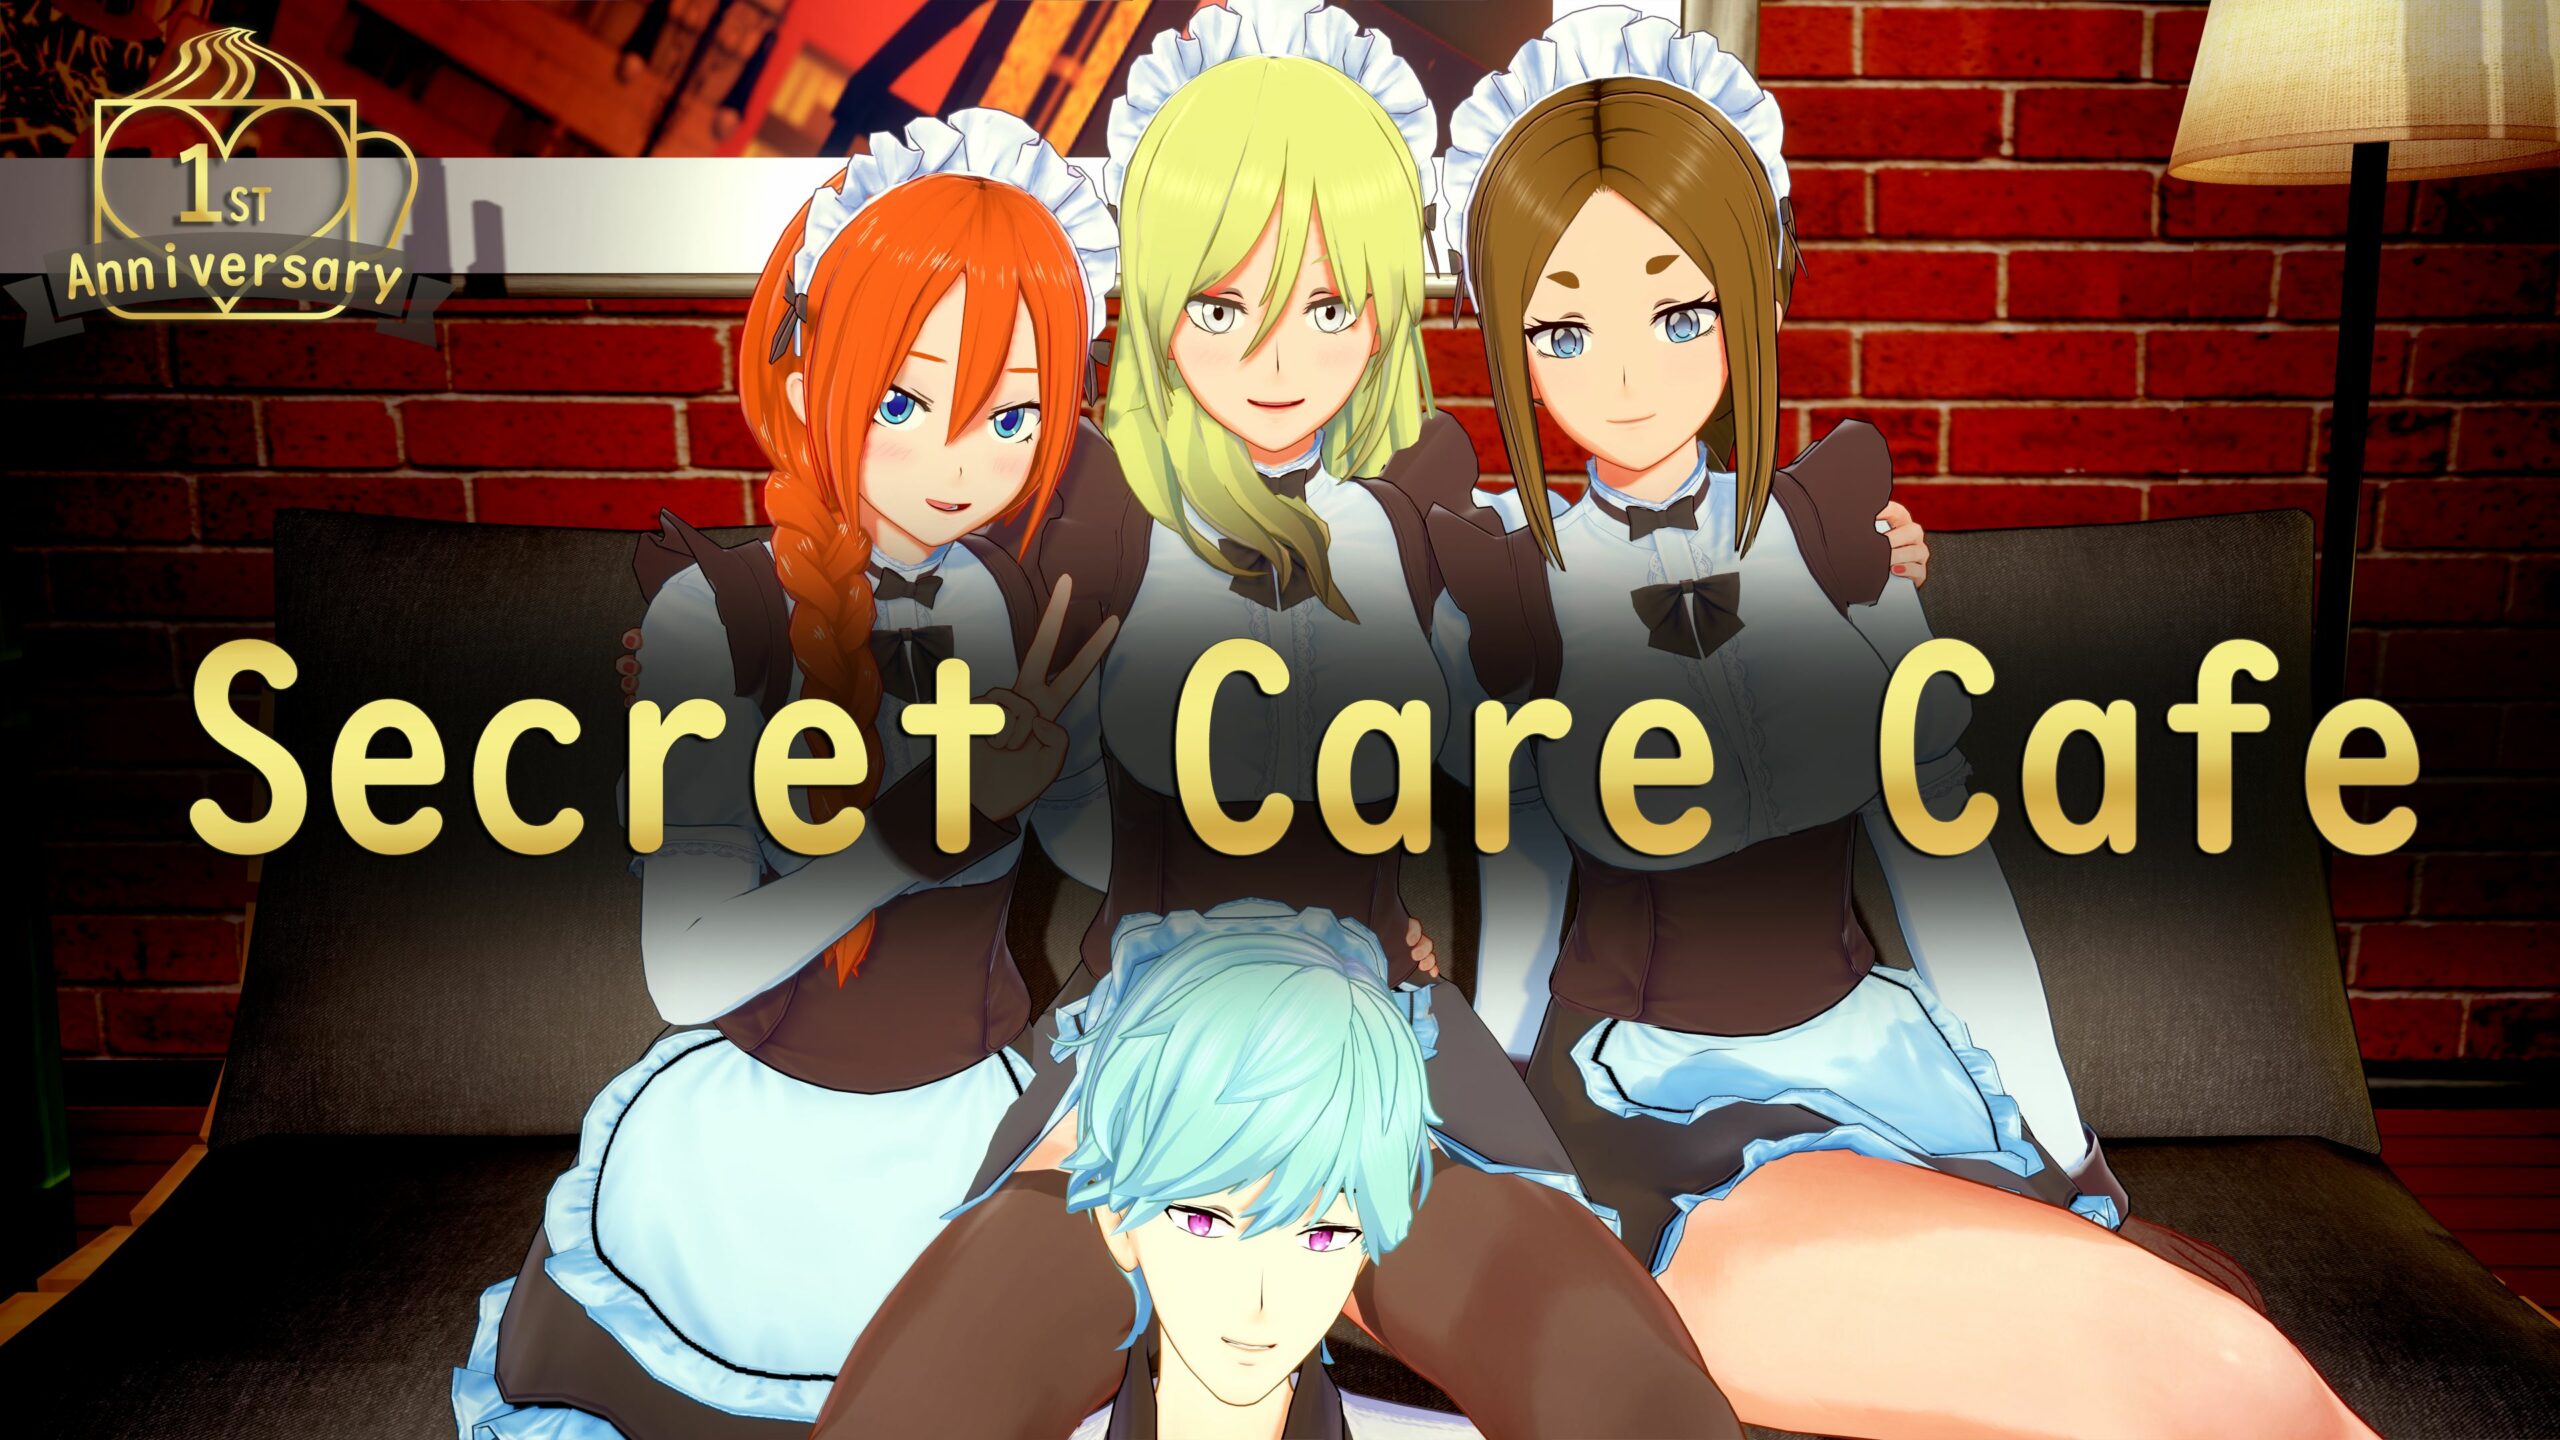 Secret Care Cafe porn xxx game download cover